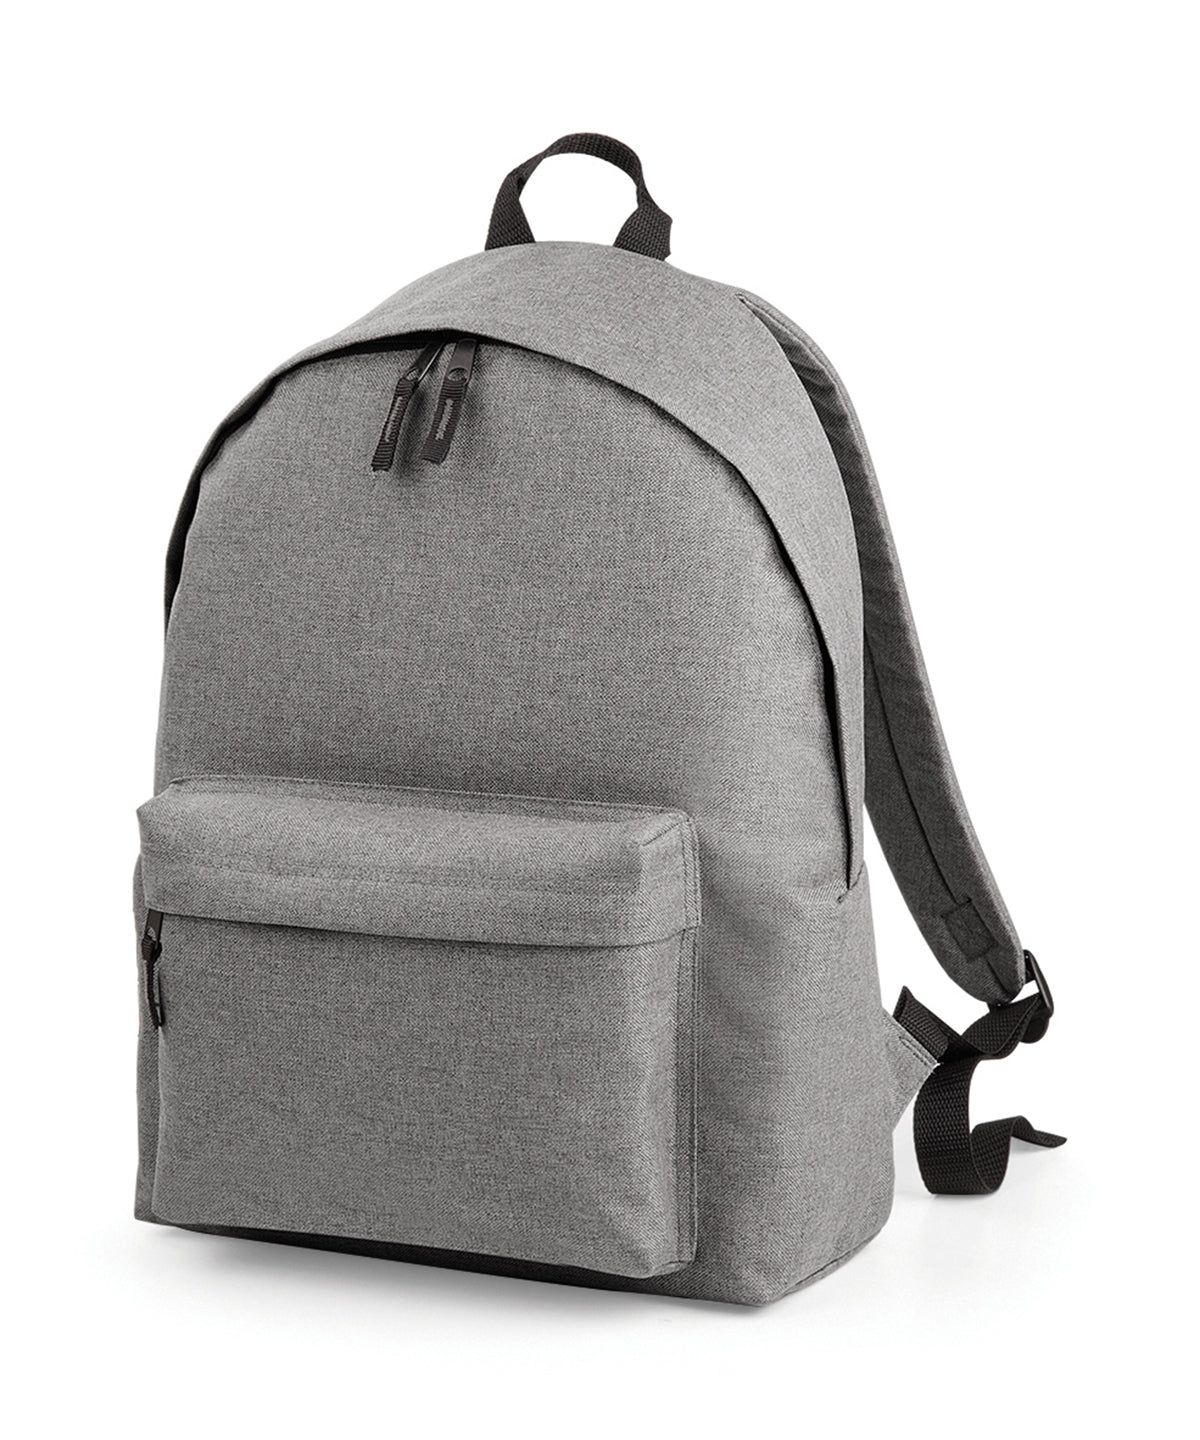 Töskur - Two-tone Fashion Backpack